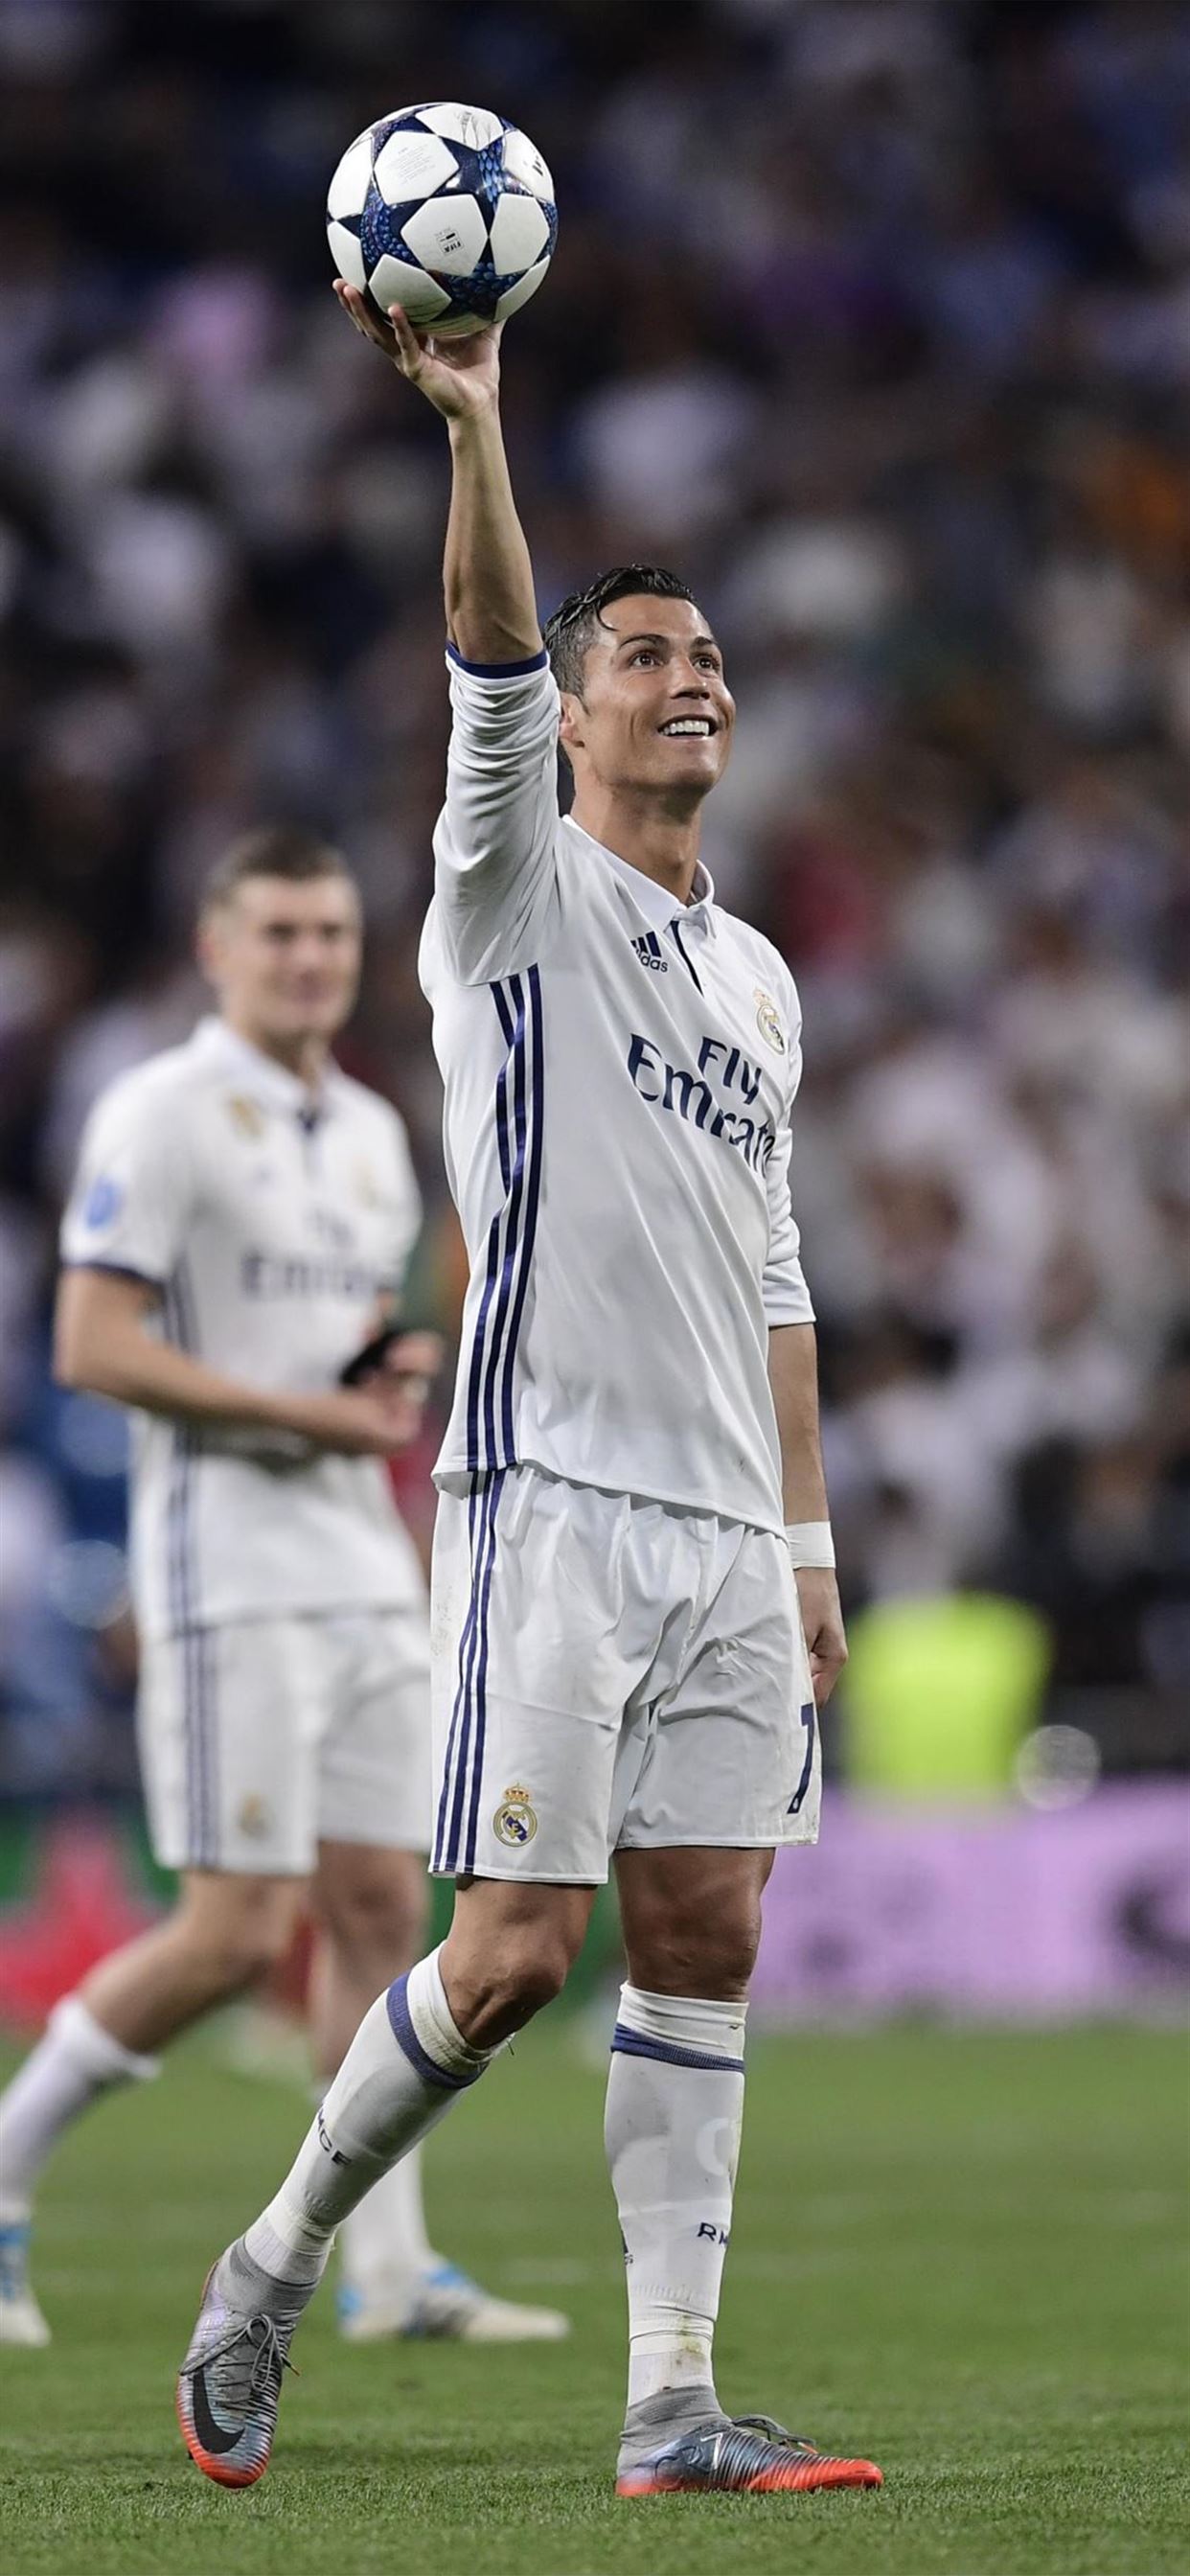 Cristiano Ronaldo Wallpaper Real Madrid 67 images